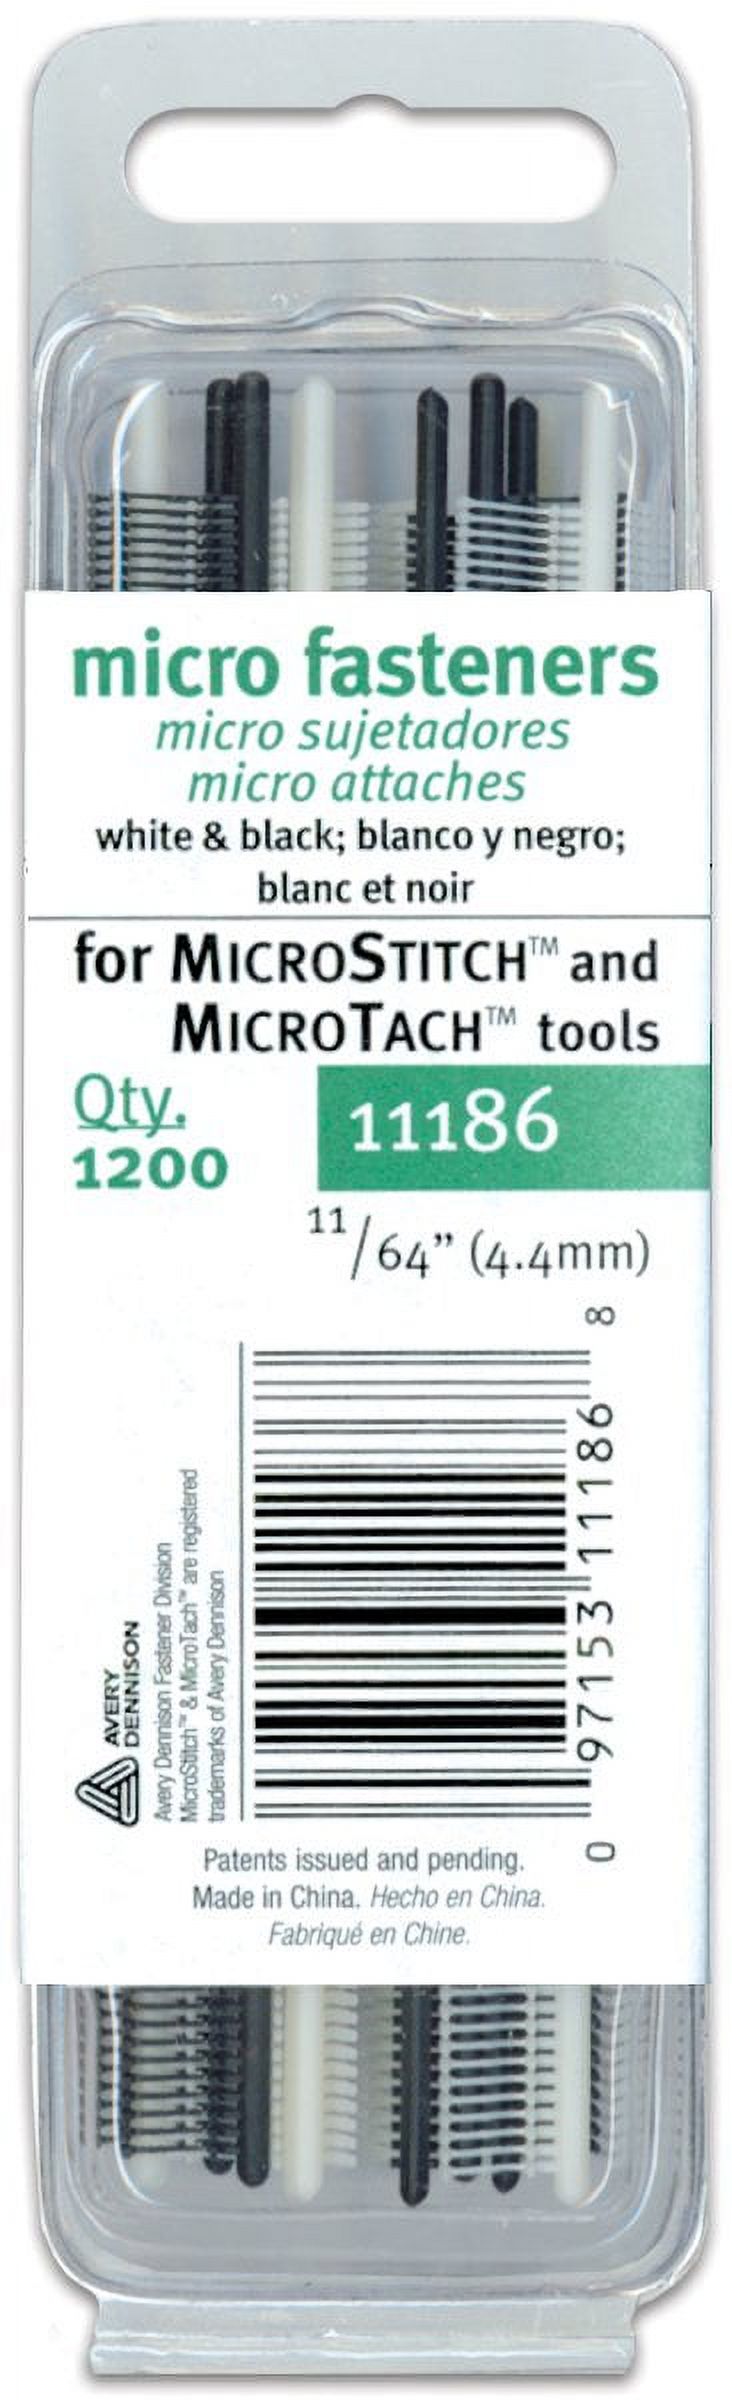 Avery Dennison Corporation 4.4mm Micro Stitch Fastener Refills, White &  Black 1,200/Pkg 